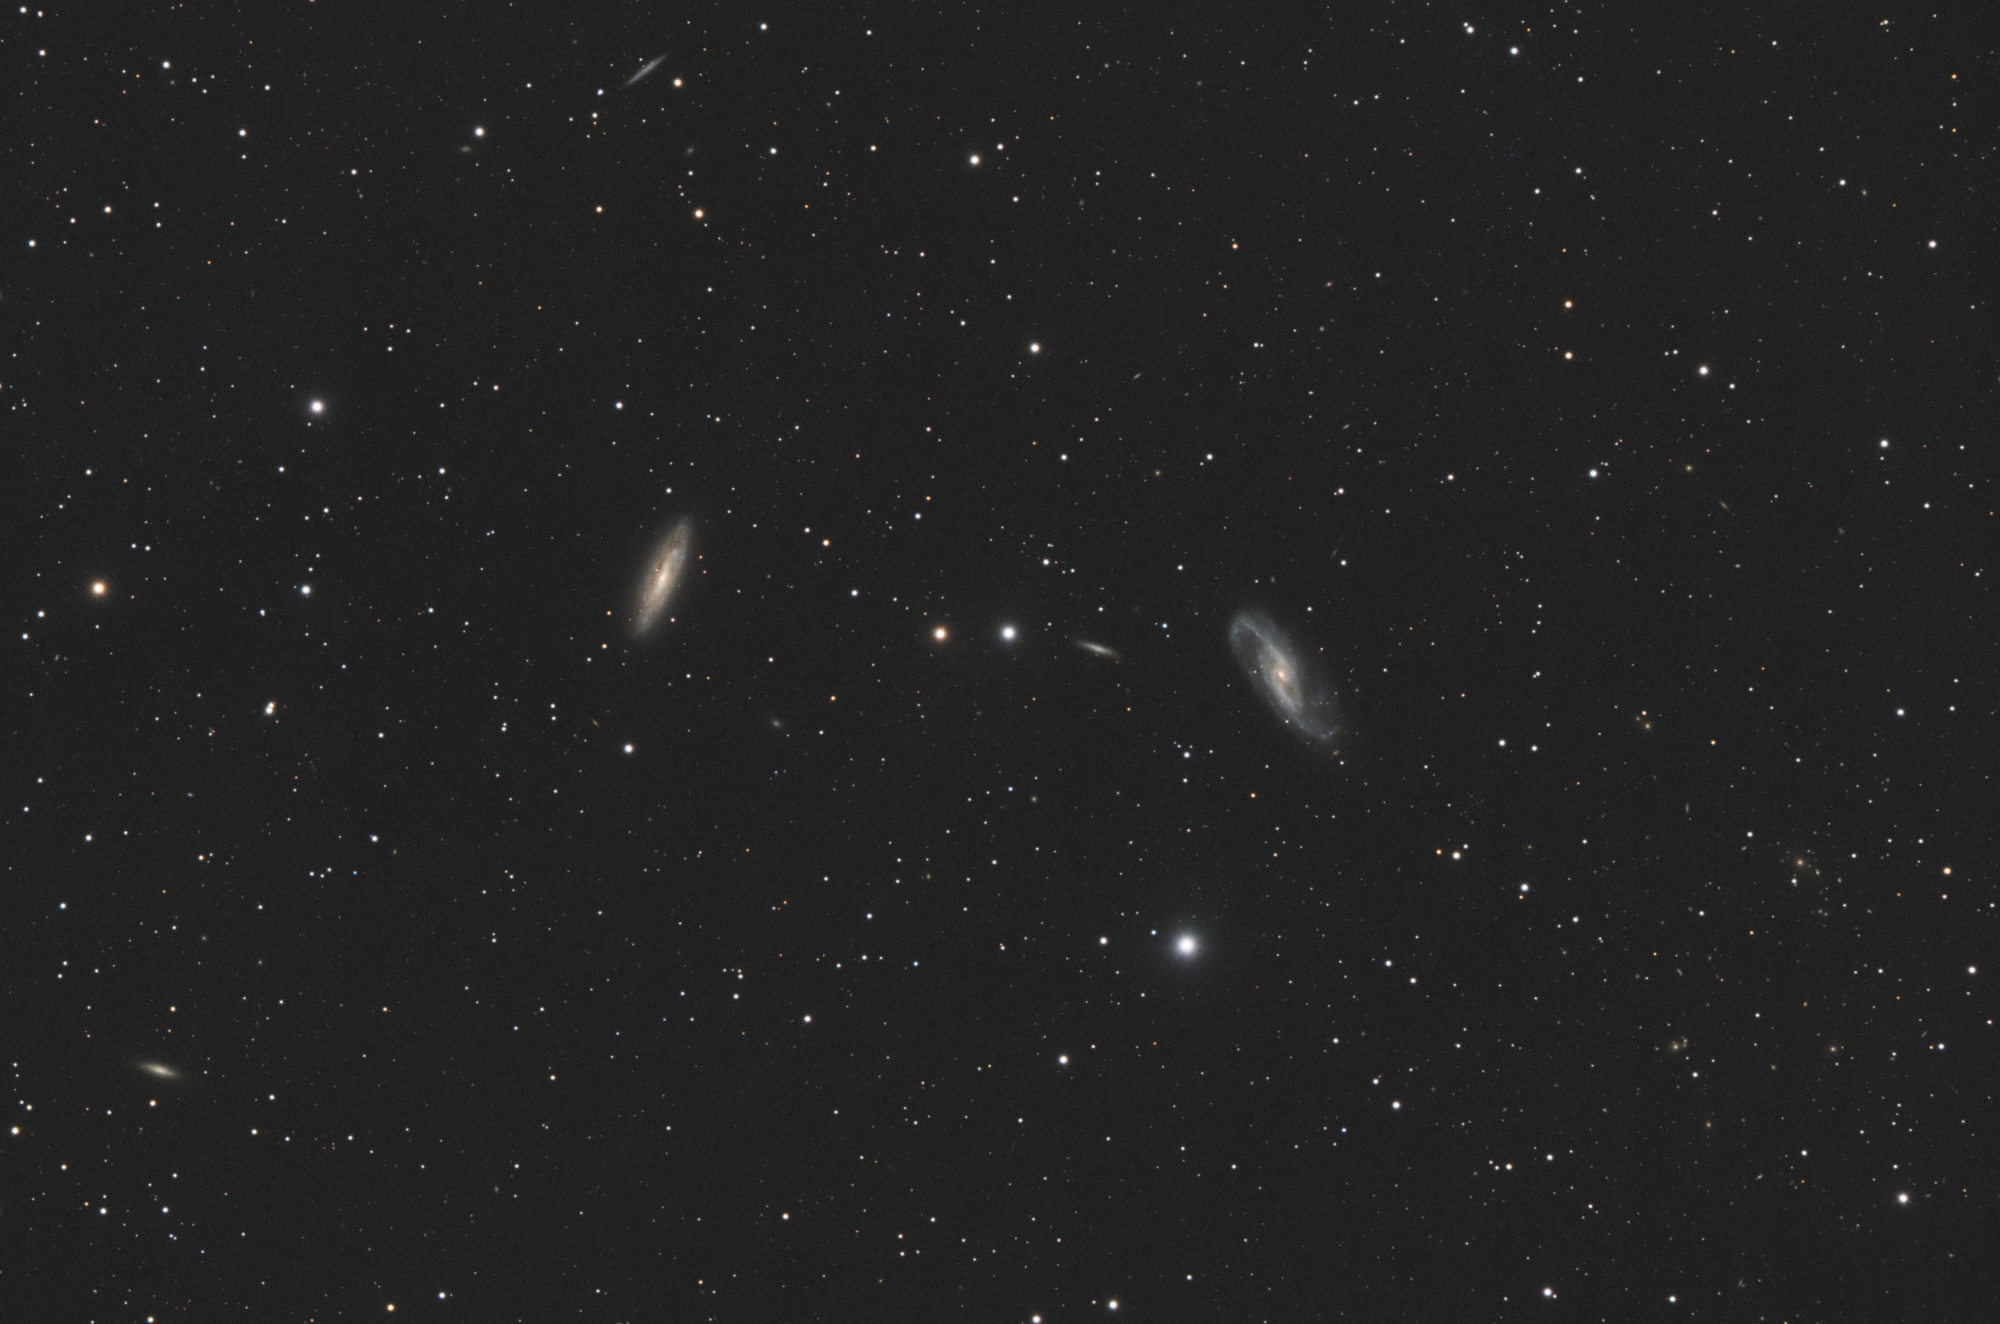 NGC_4536_&_NGC_4527_SIRIL-L-iris-cs5-2-FINAL-1-x.jpg